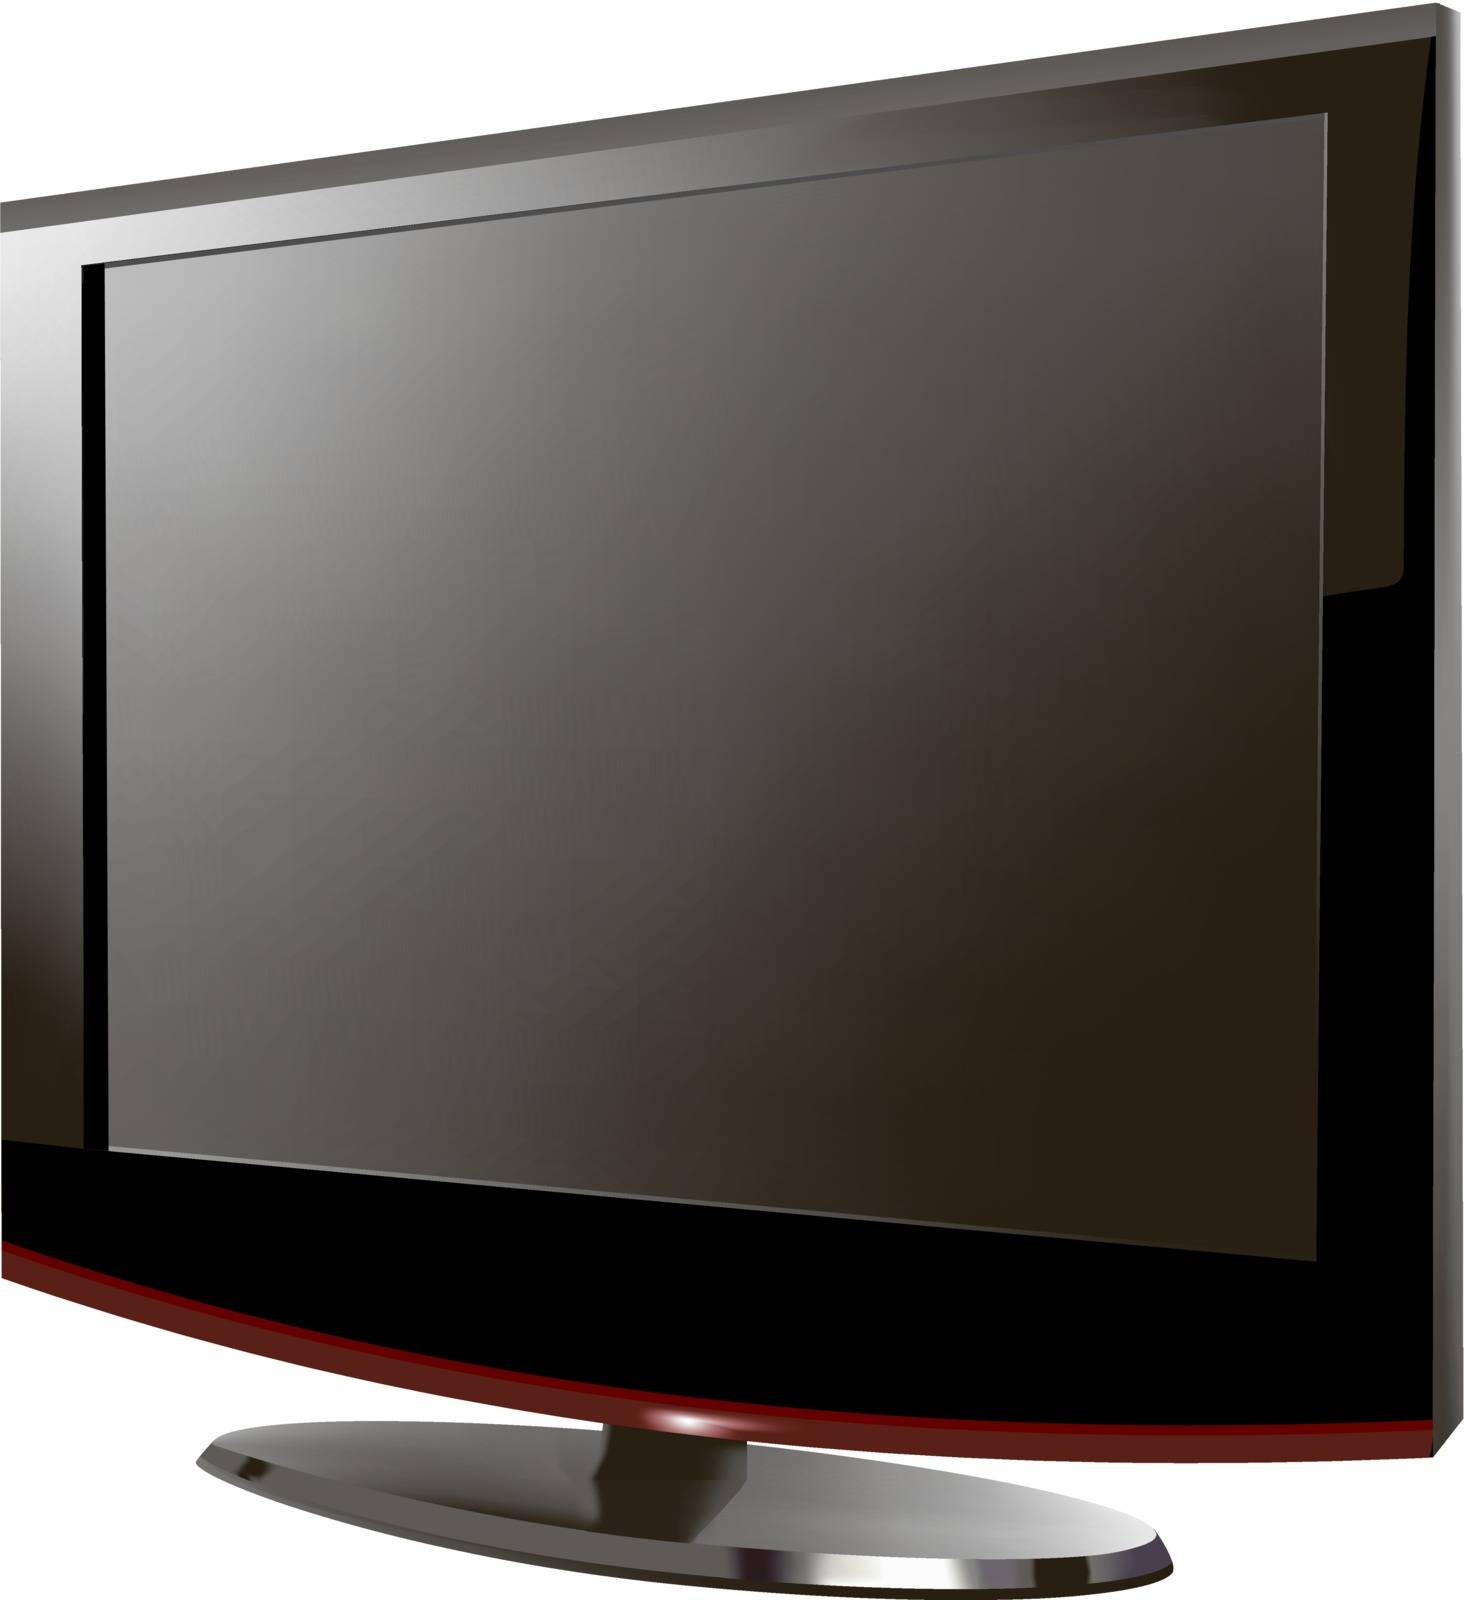 TV screen by bormash